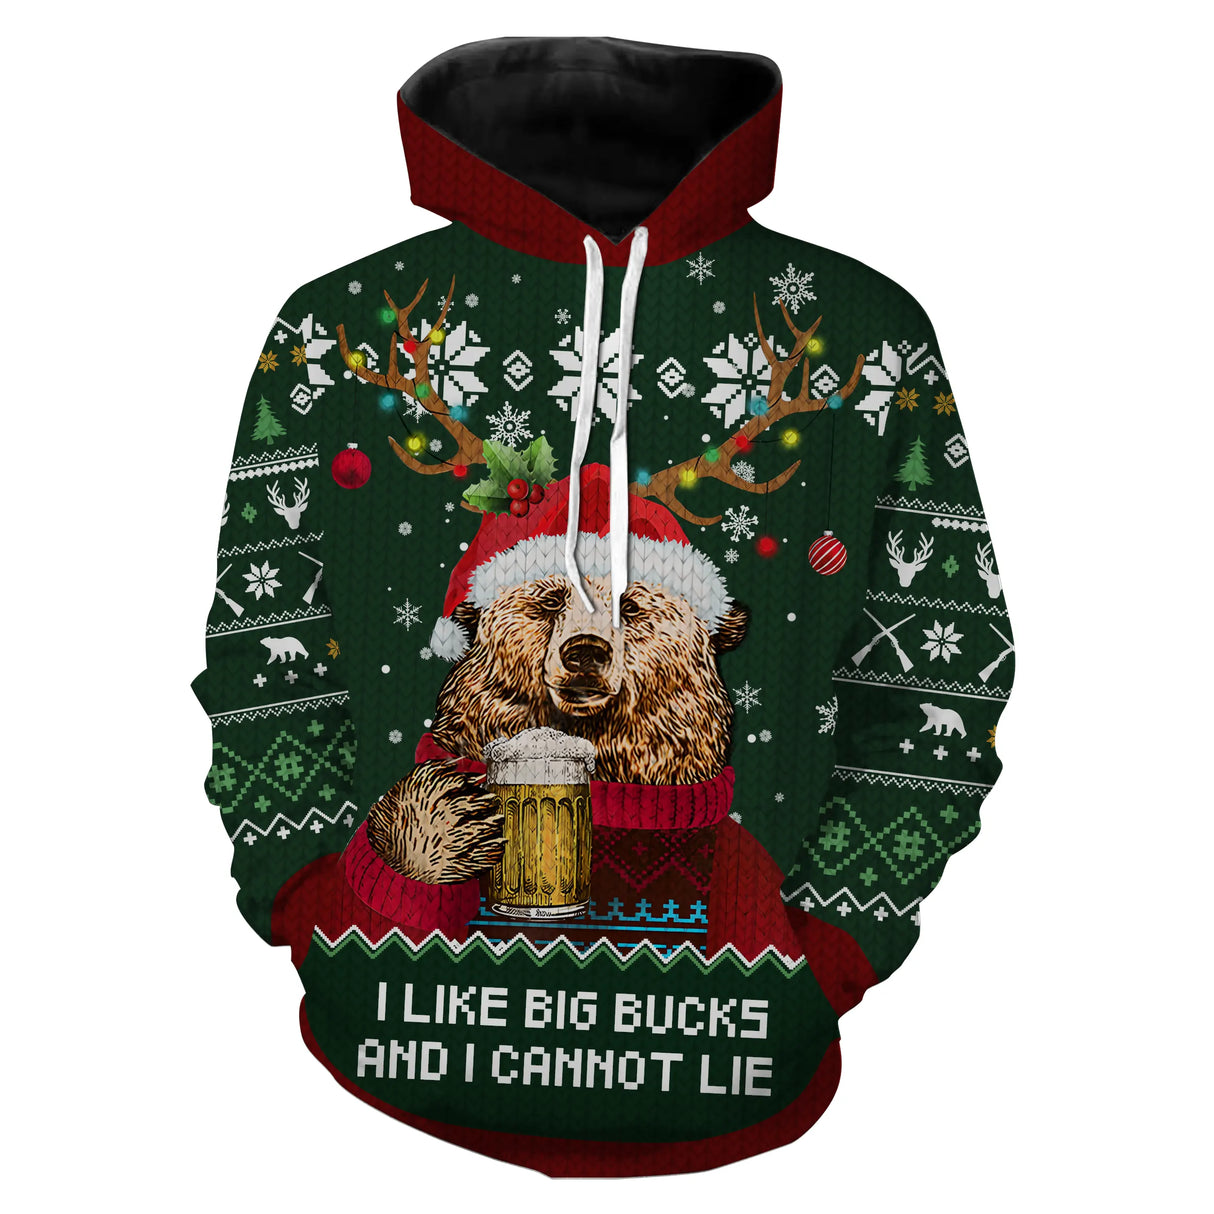 Green Christmas Sweater, Bear Drinks Beer, I Like Big Bucks Pattern, Family Christmas Gift - CT07112237